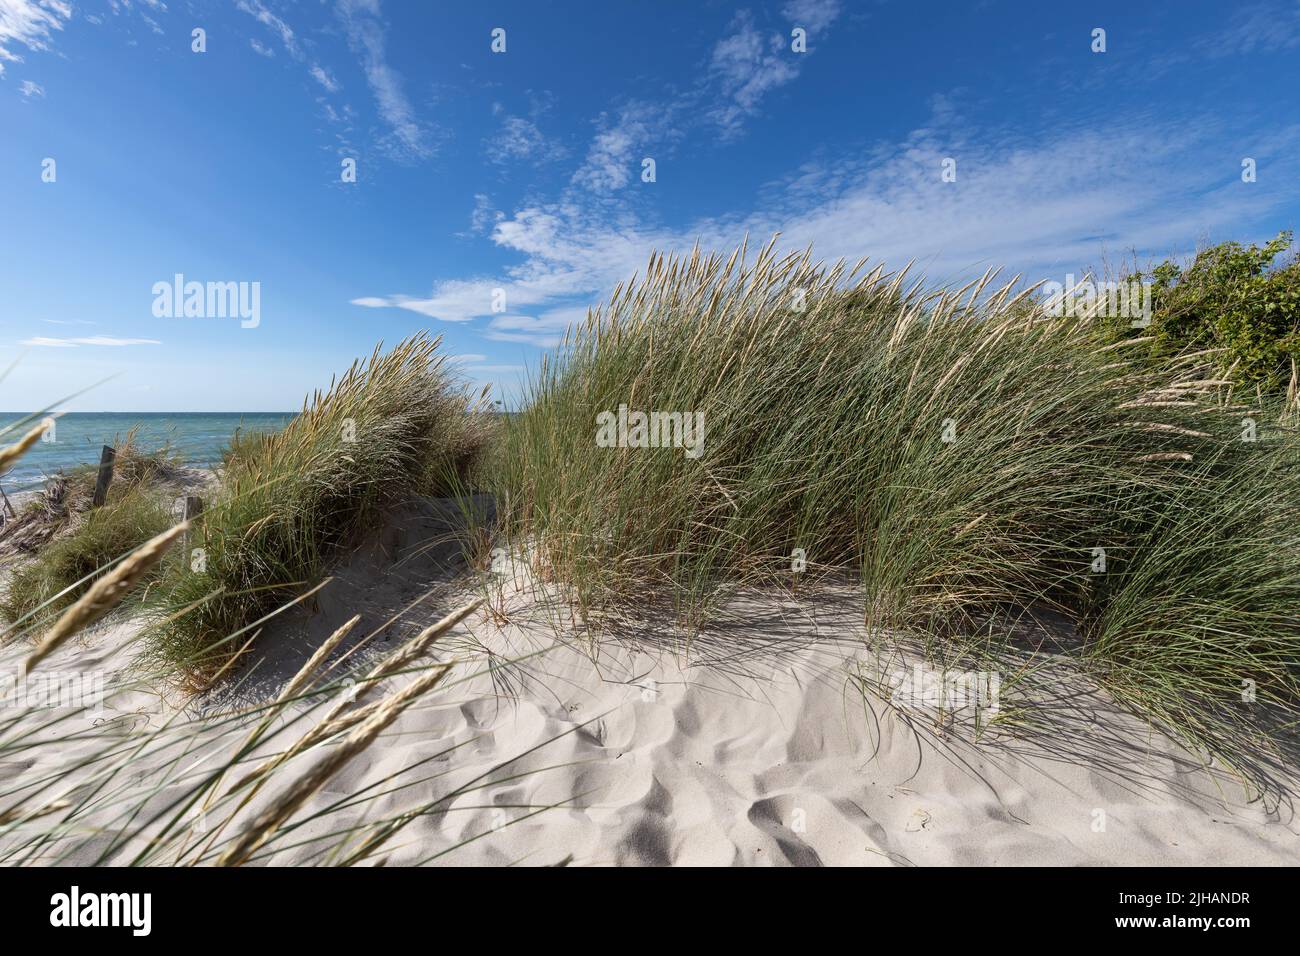 marram grass on sand dune Stock Photo